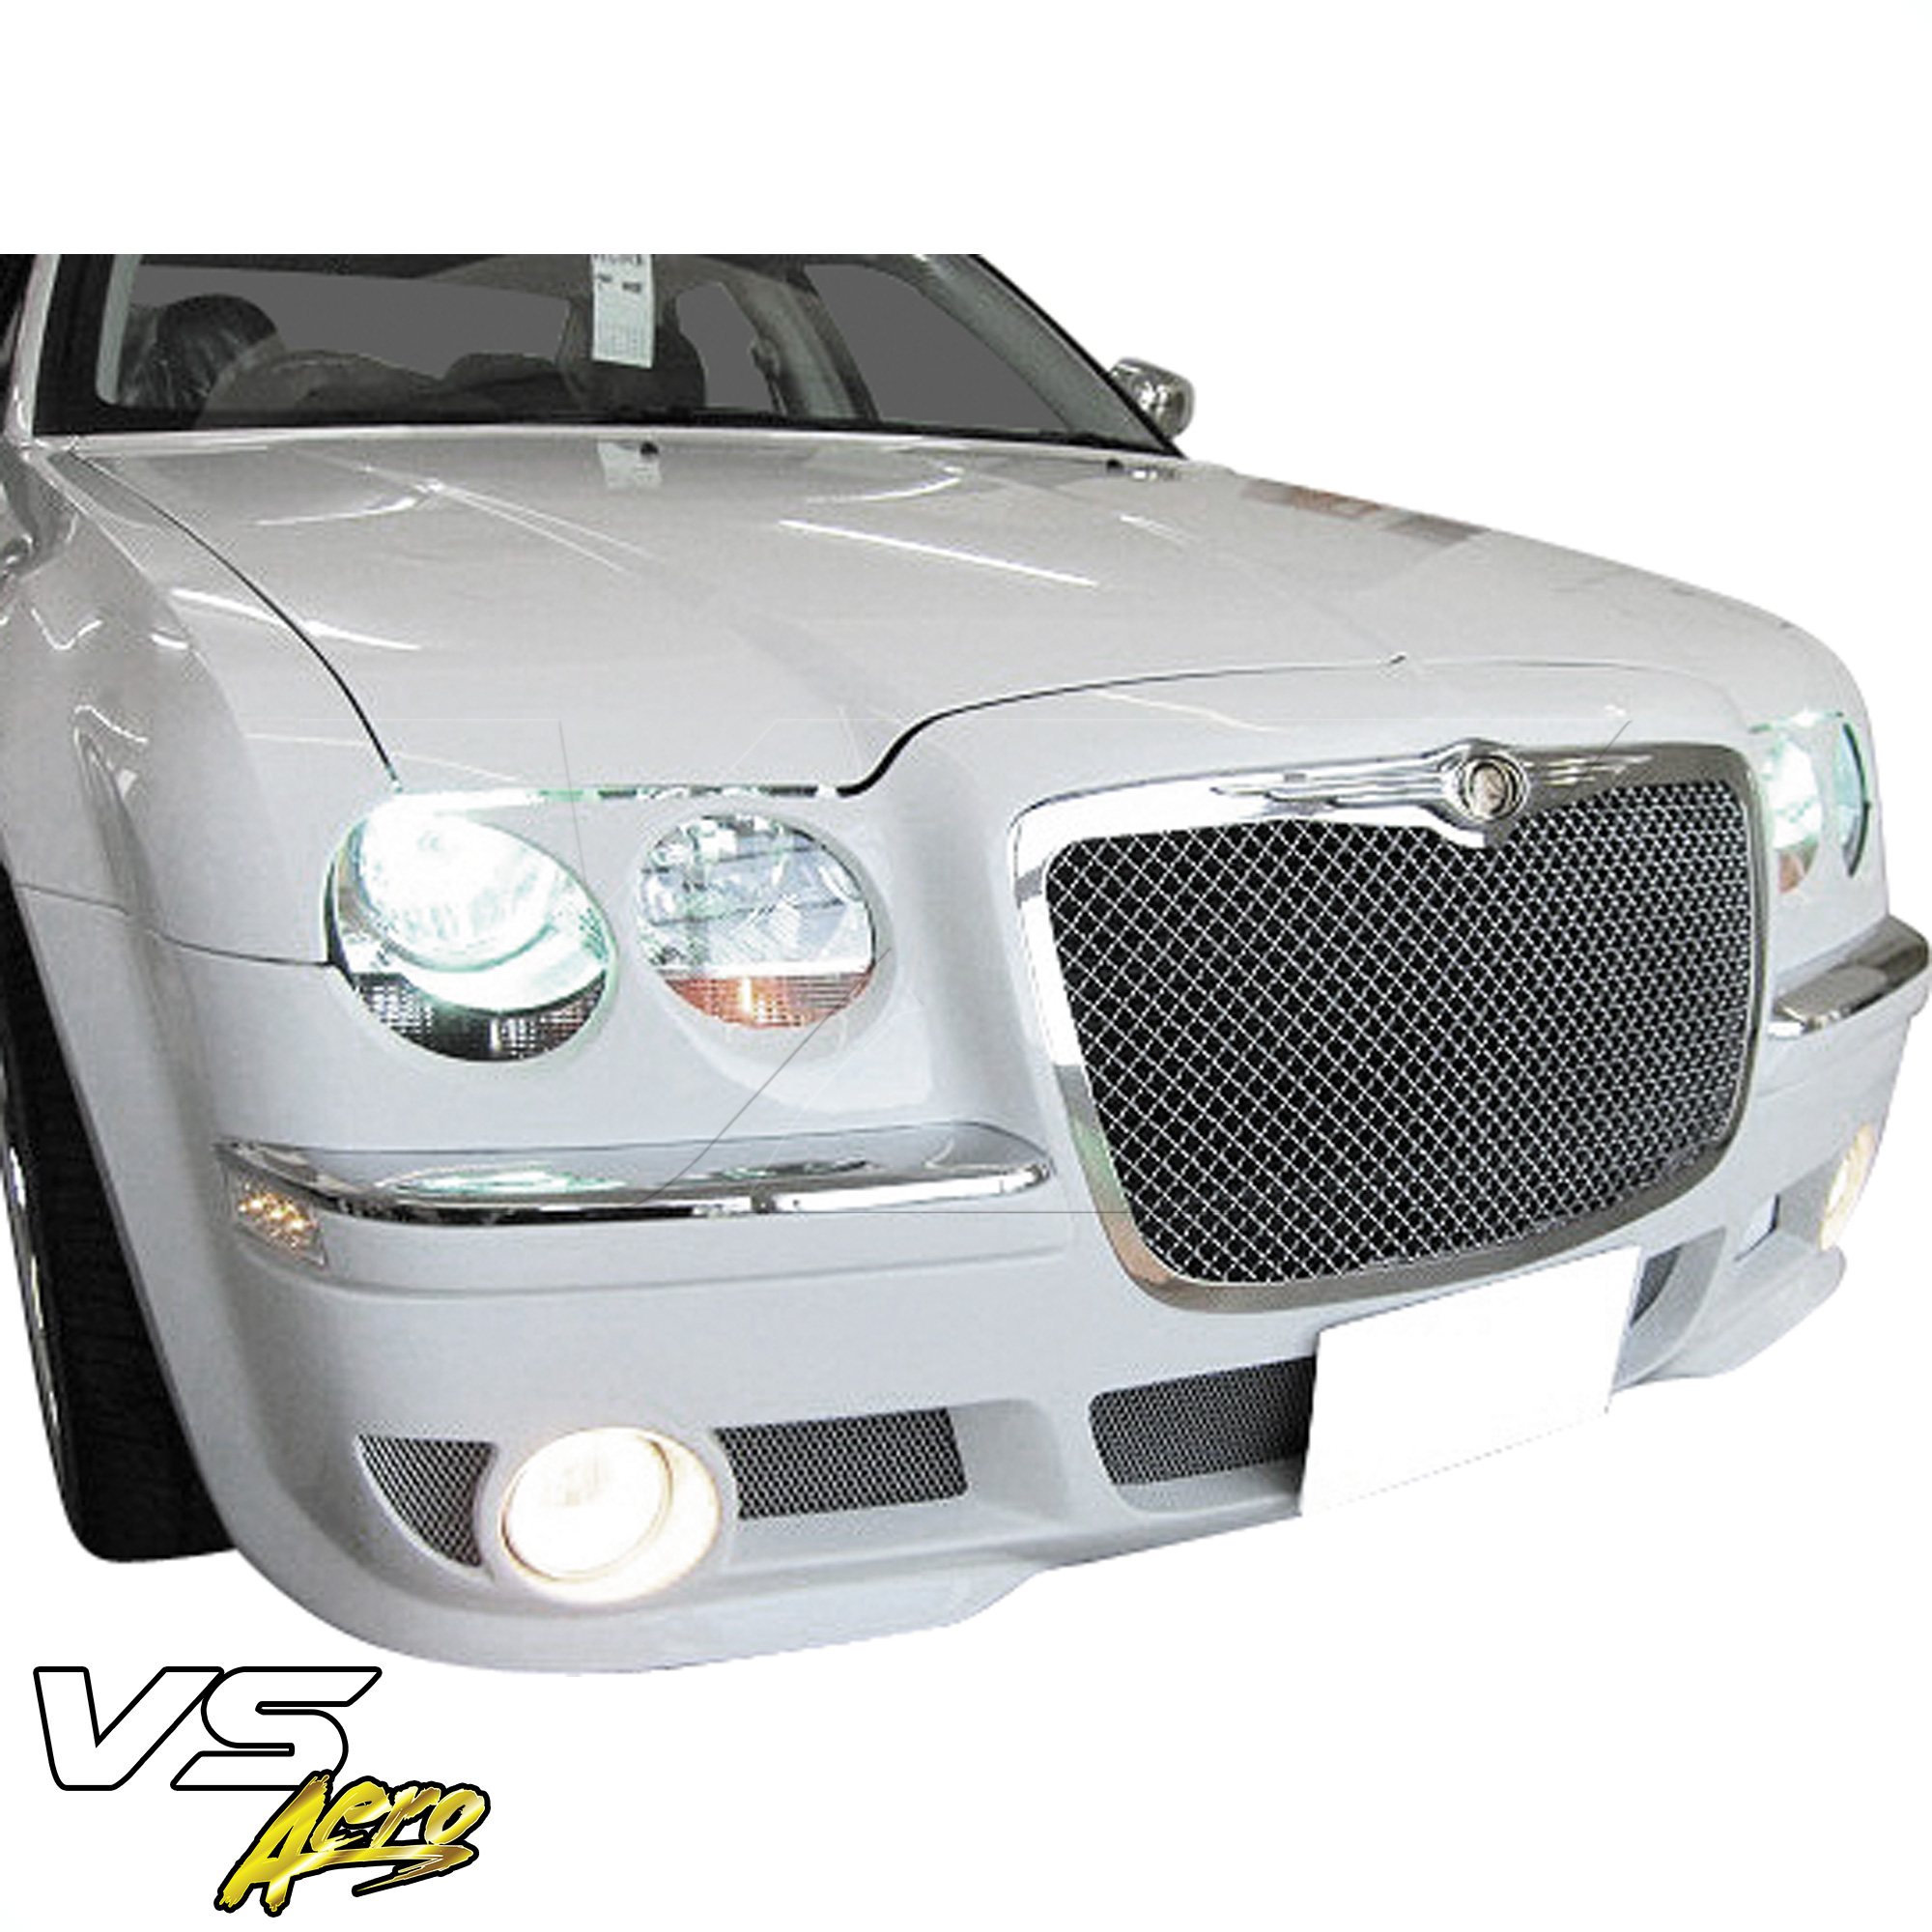 VSaero FRP BOME Front Bumper 1pc > Chrysler 300C 2005-2010 - Image 15